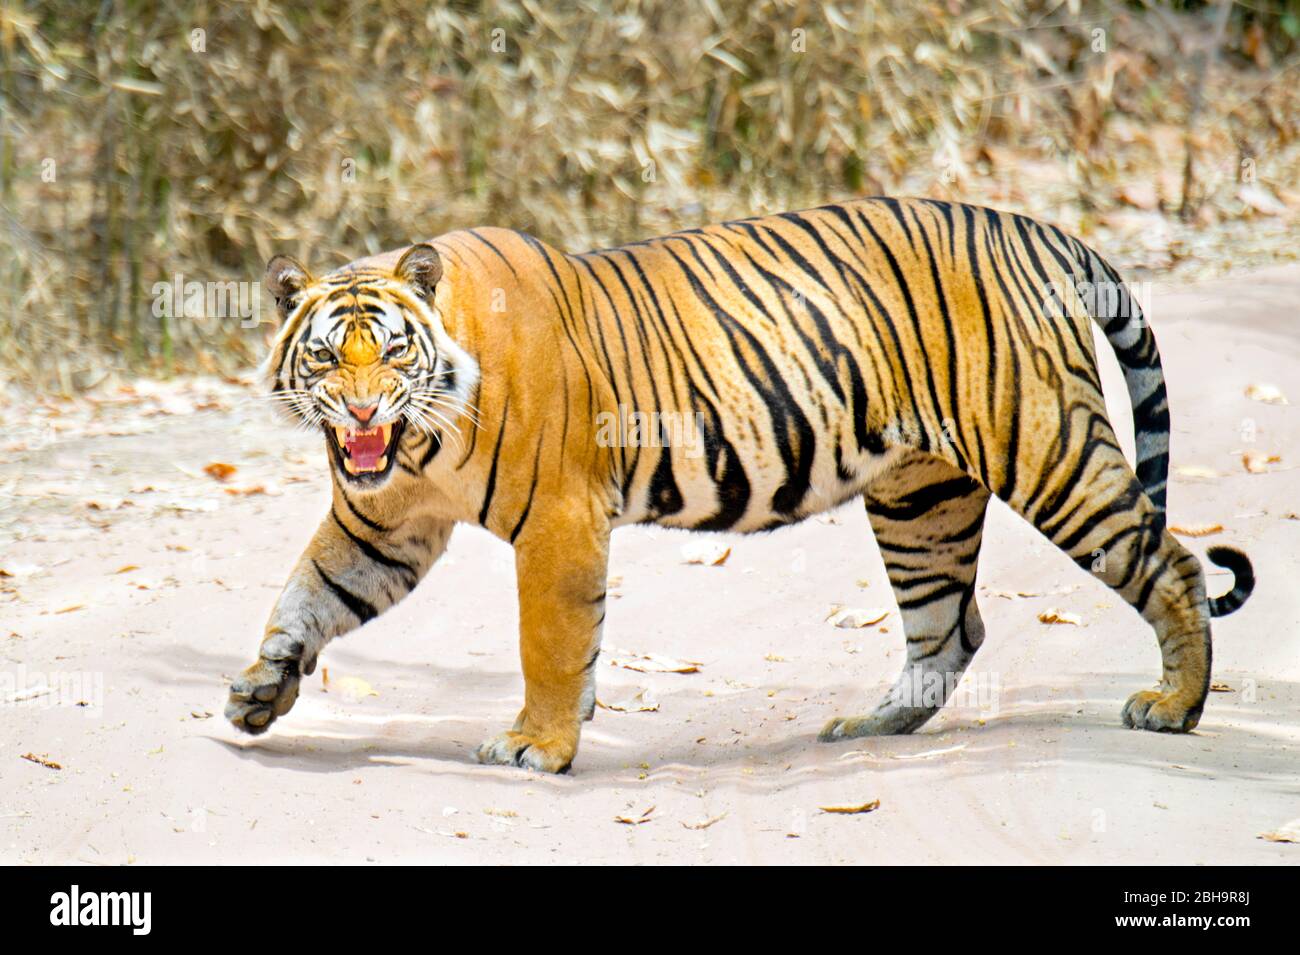 Close-up of roaring Bengal tiger, India Stock Photo